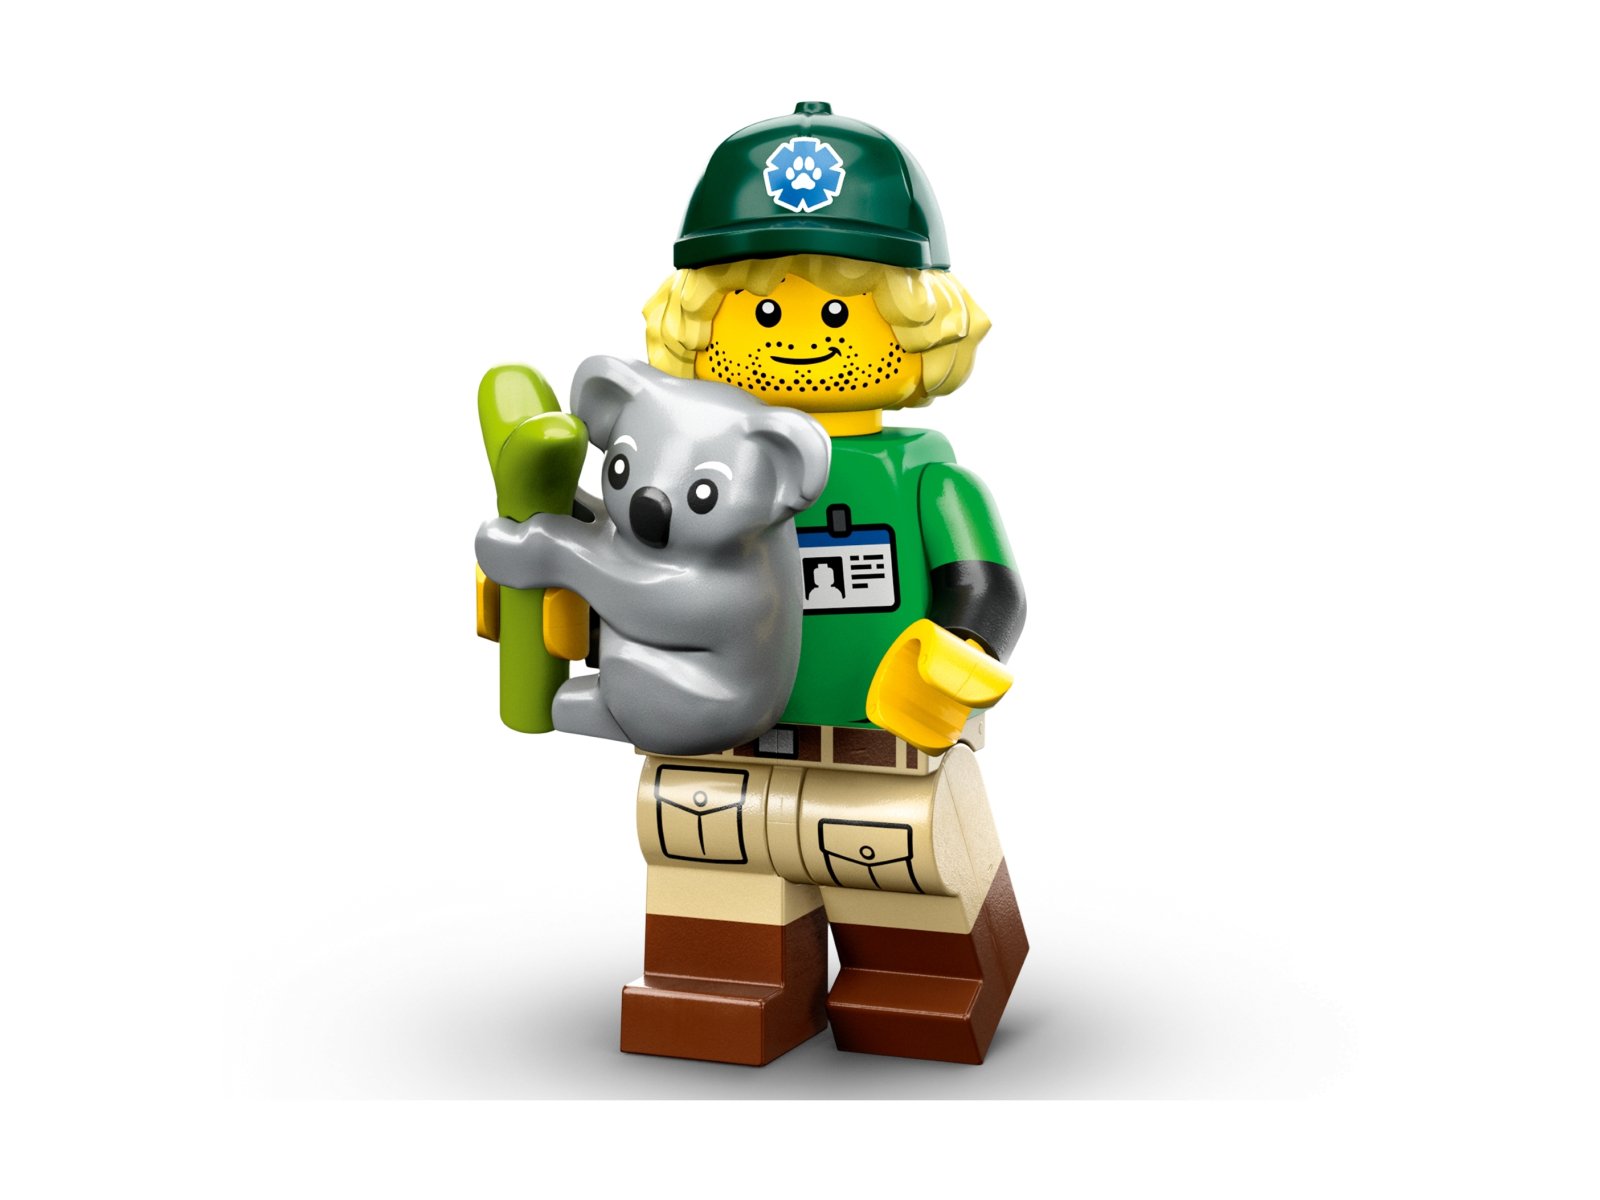 LEGO Minifigures Seria 24 71037